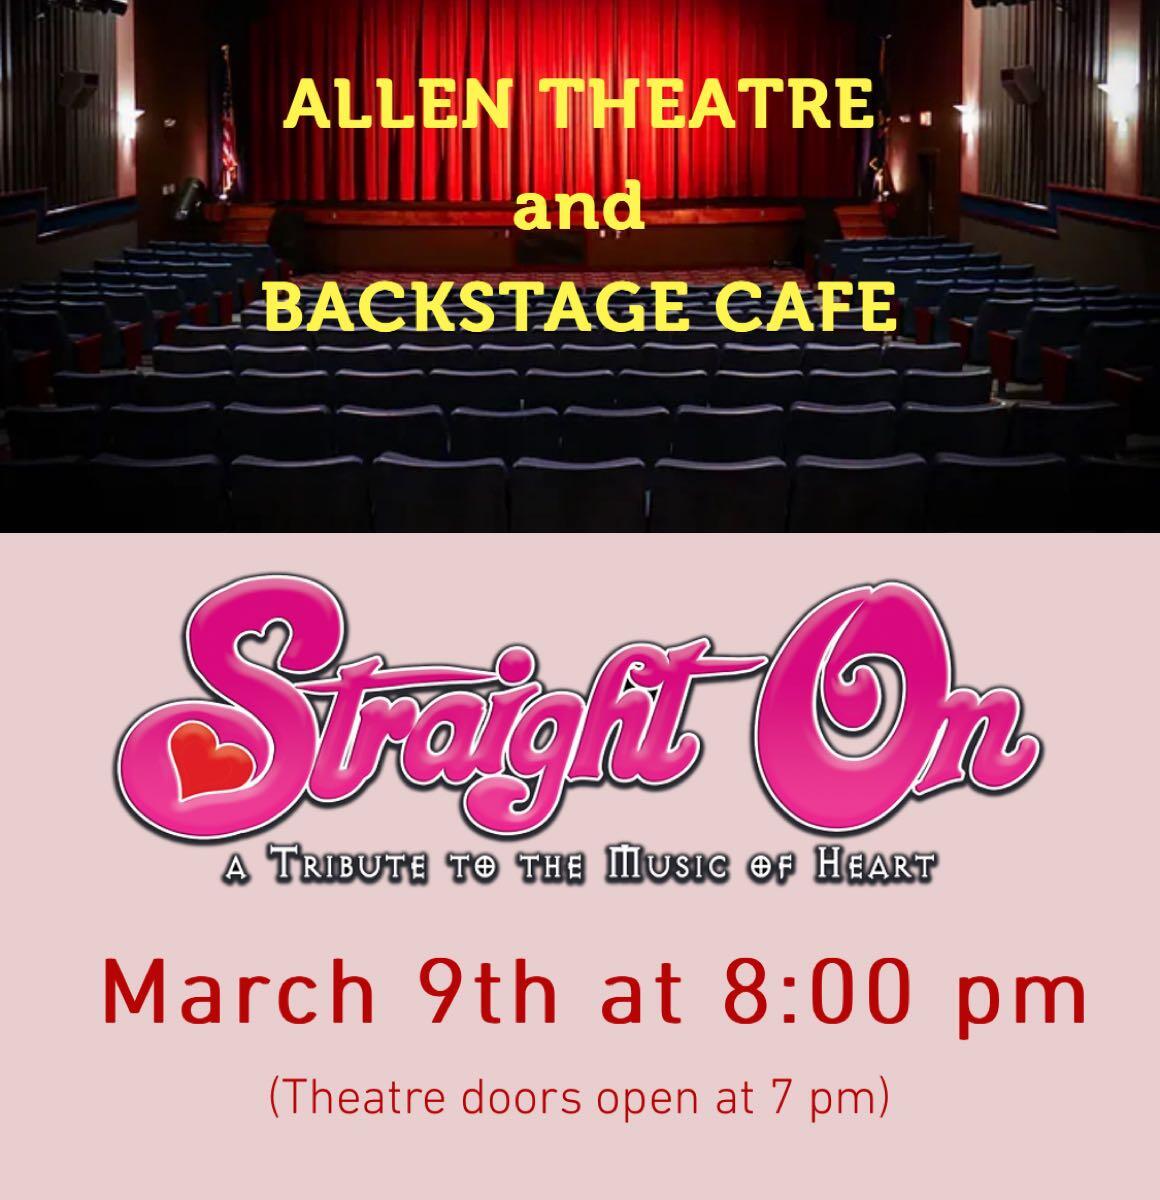 Allen Theatre and Backstage Cafe, cinema